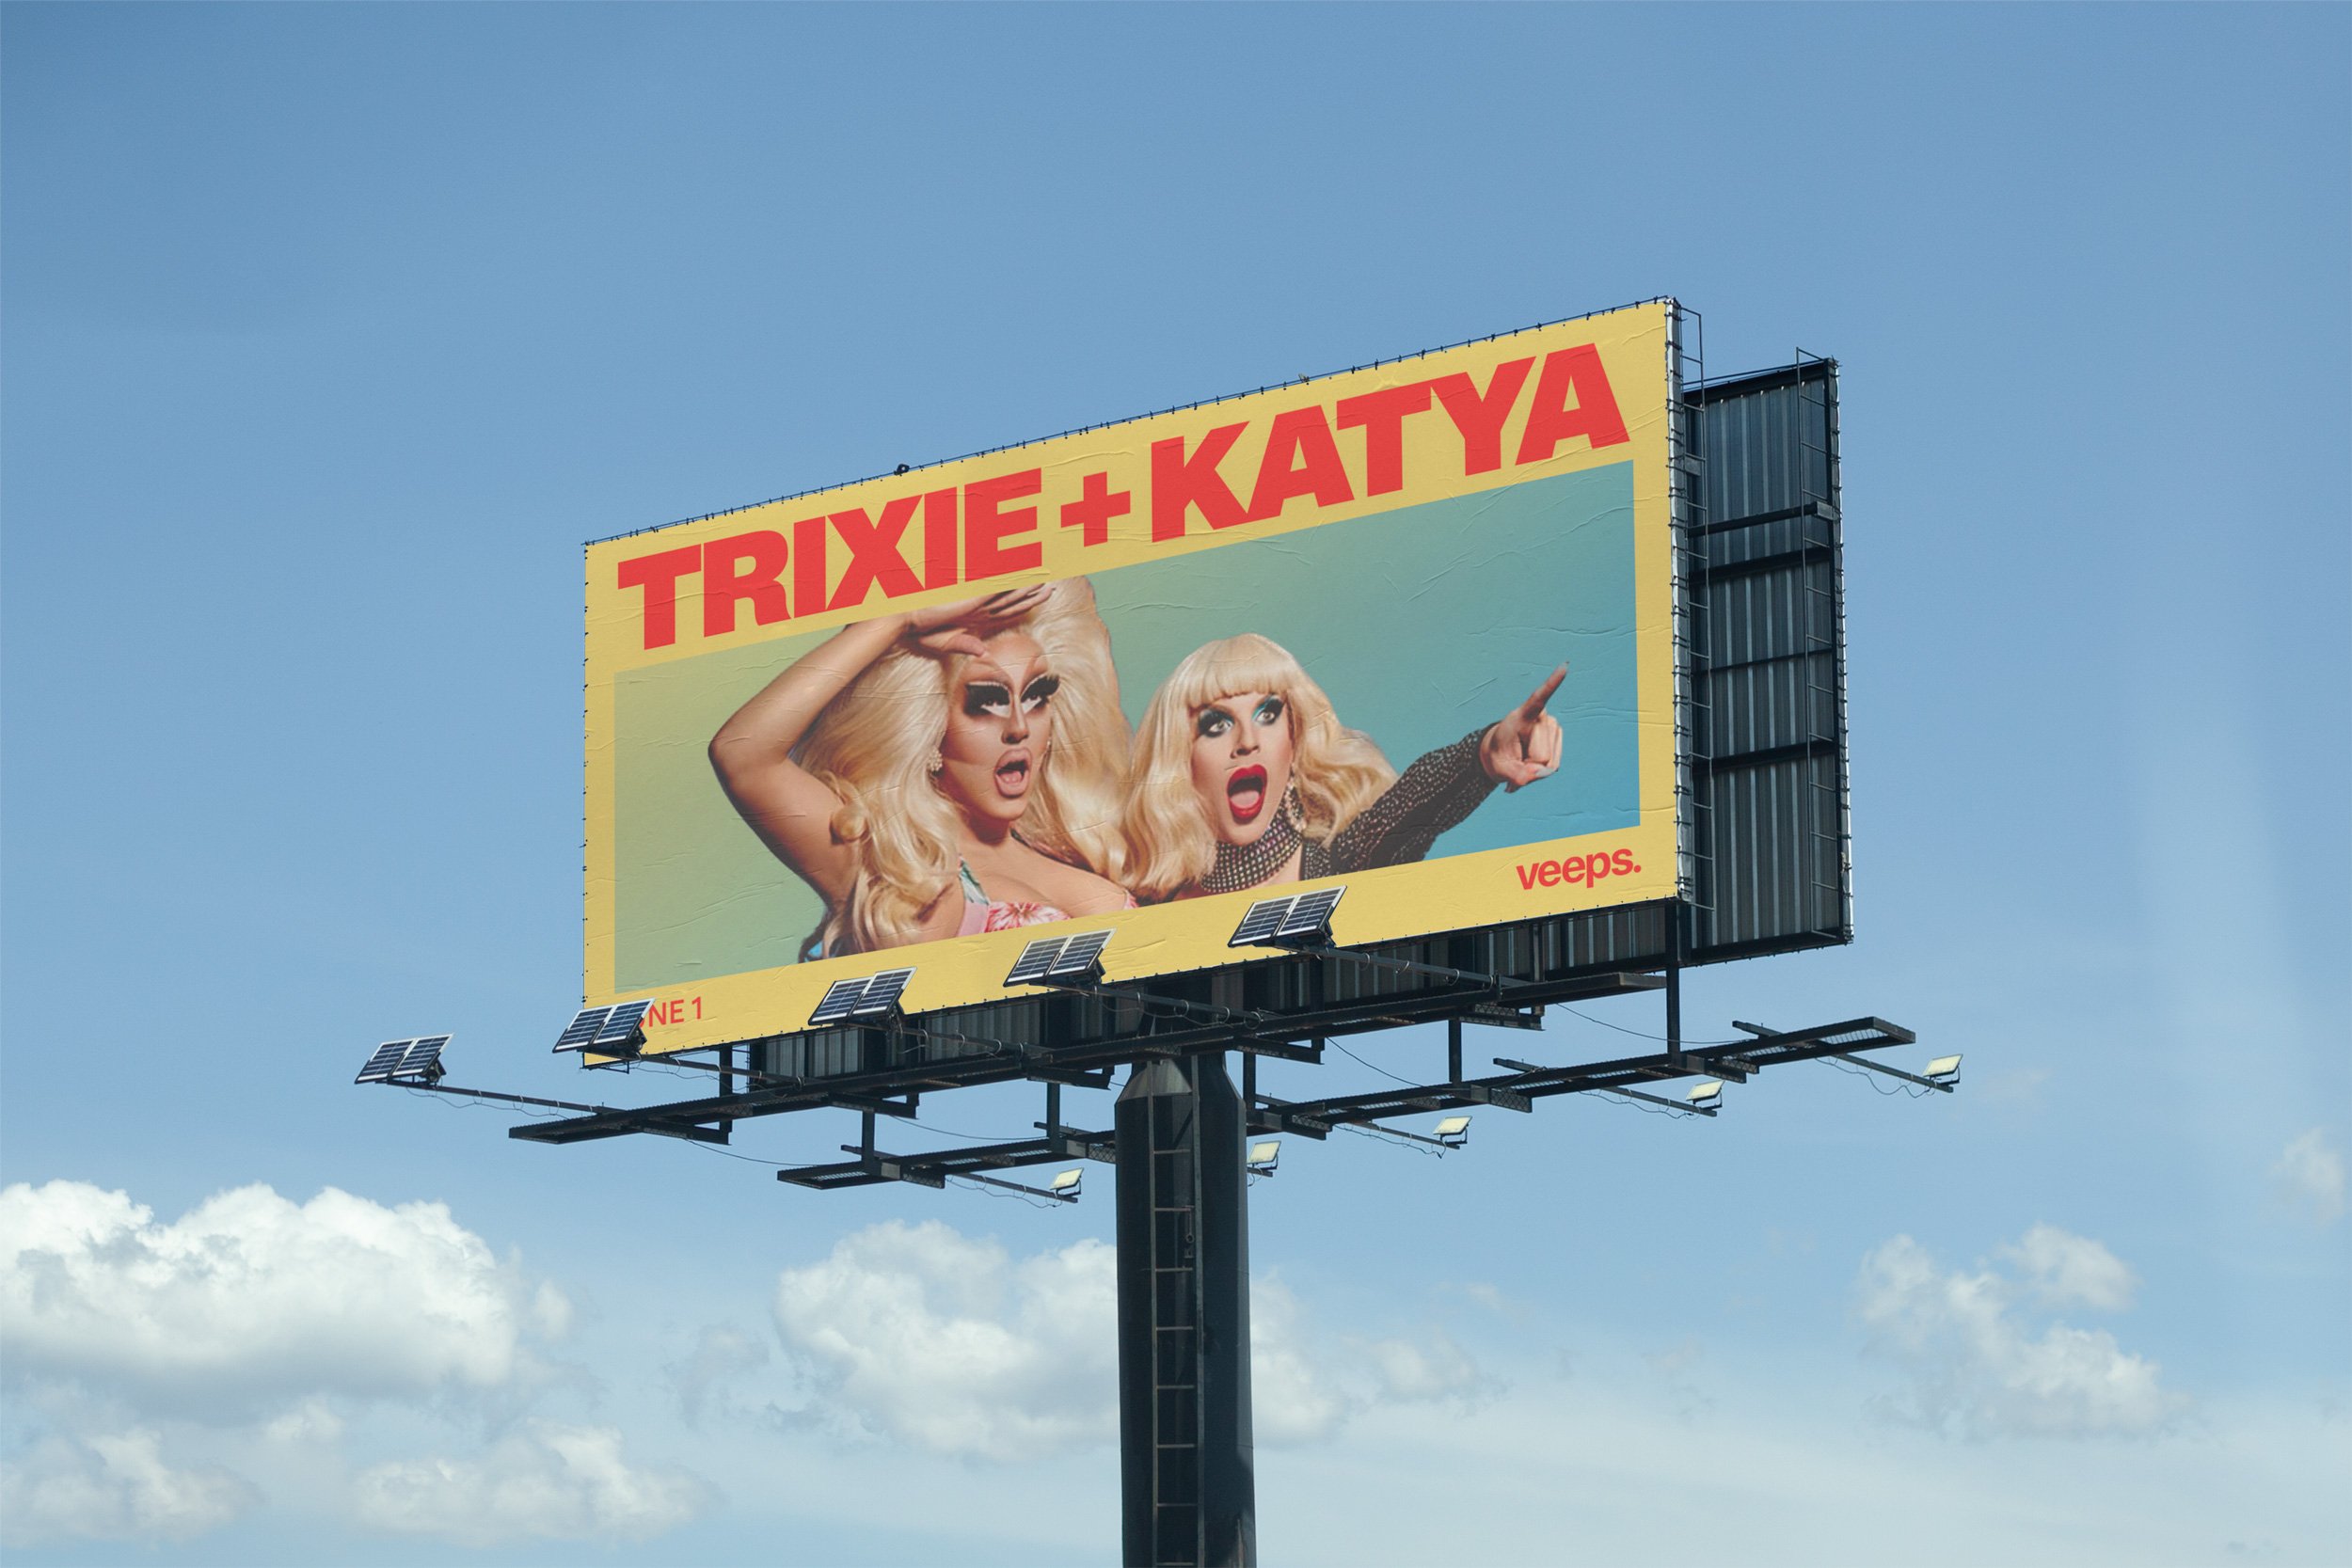 Trixie-Katya-Billboard-002.jpg